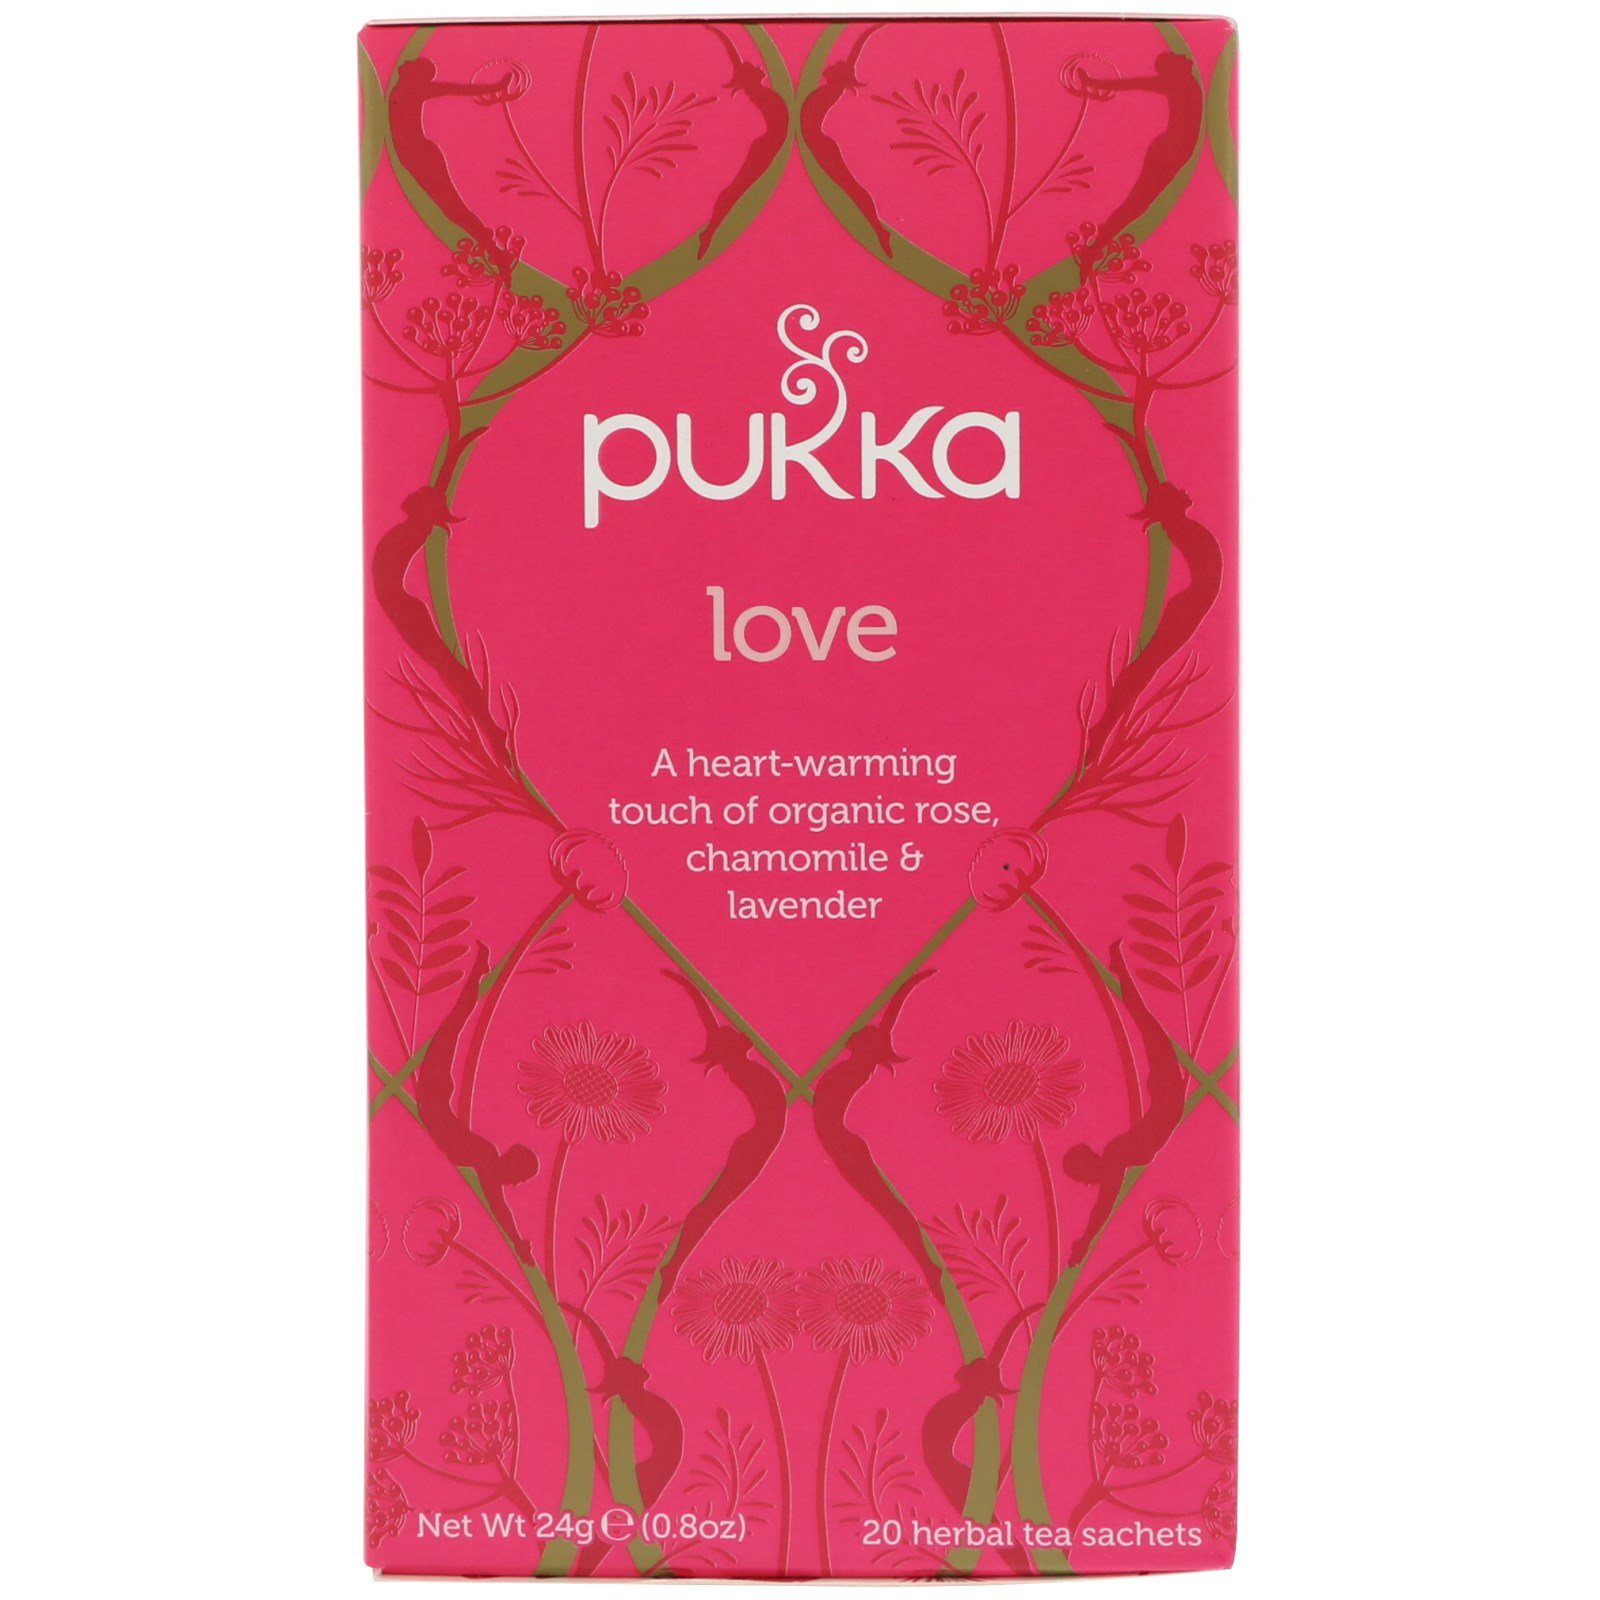 Pukka Herbs Love オーガニックローズ カモミール ラベンダーティー カフェインフリー 茶袋 0 8オンス 24 G Iherb